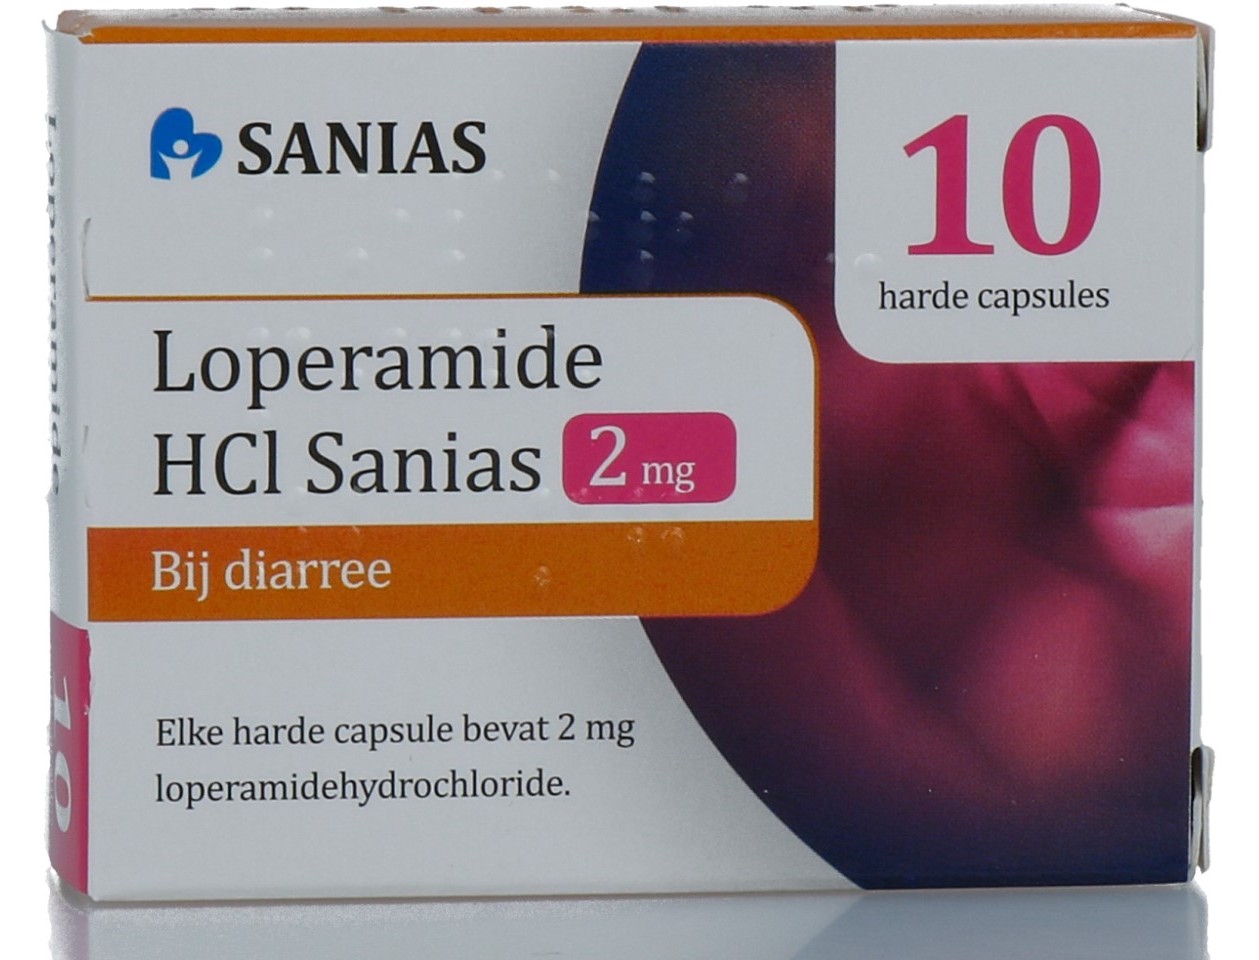 Sanias HCI Loperamide 2mg harde Capsules